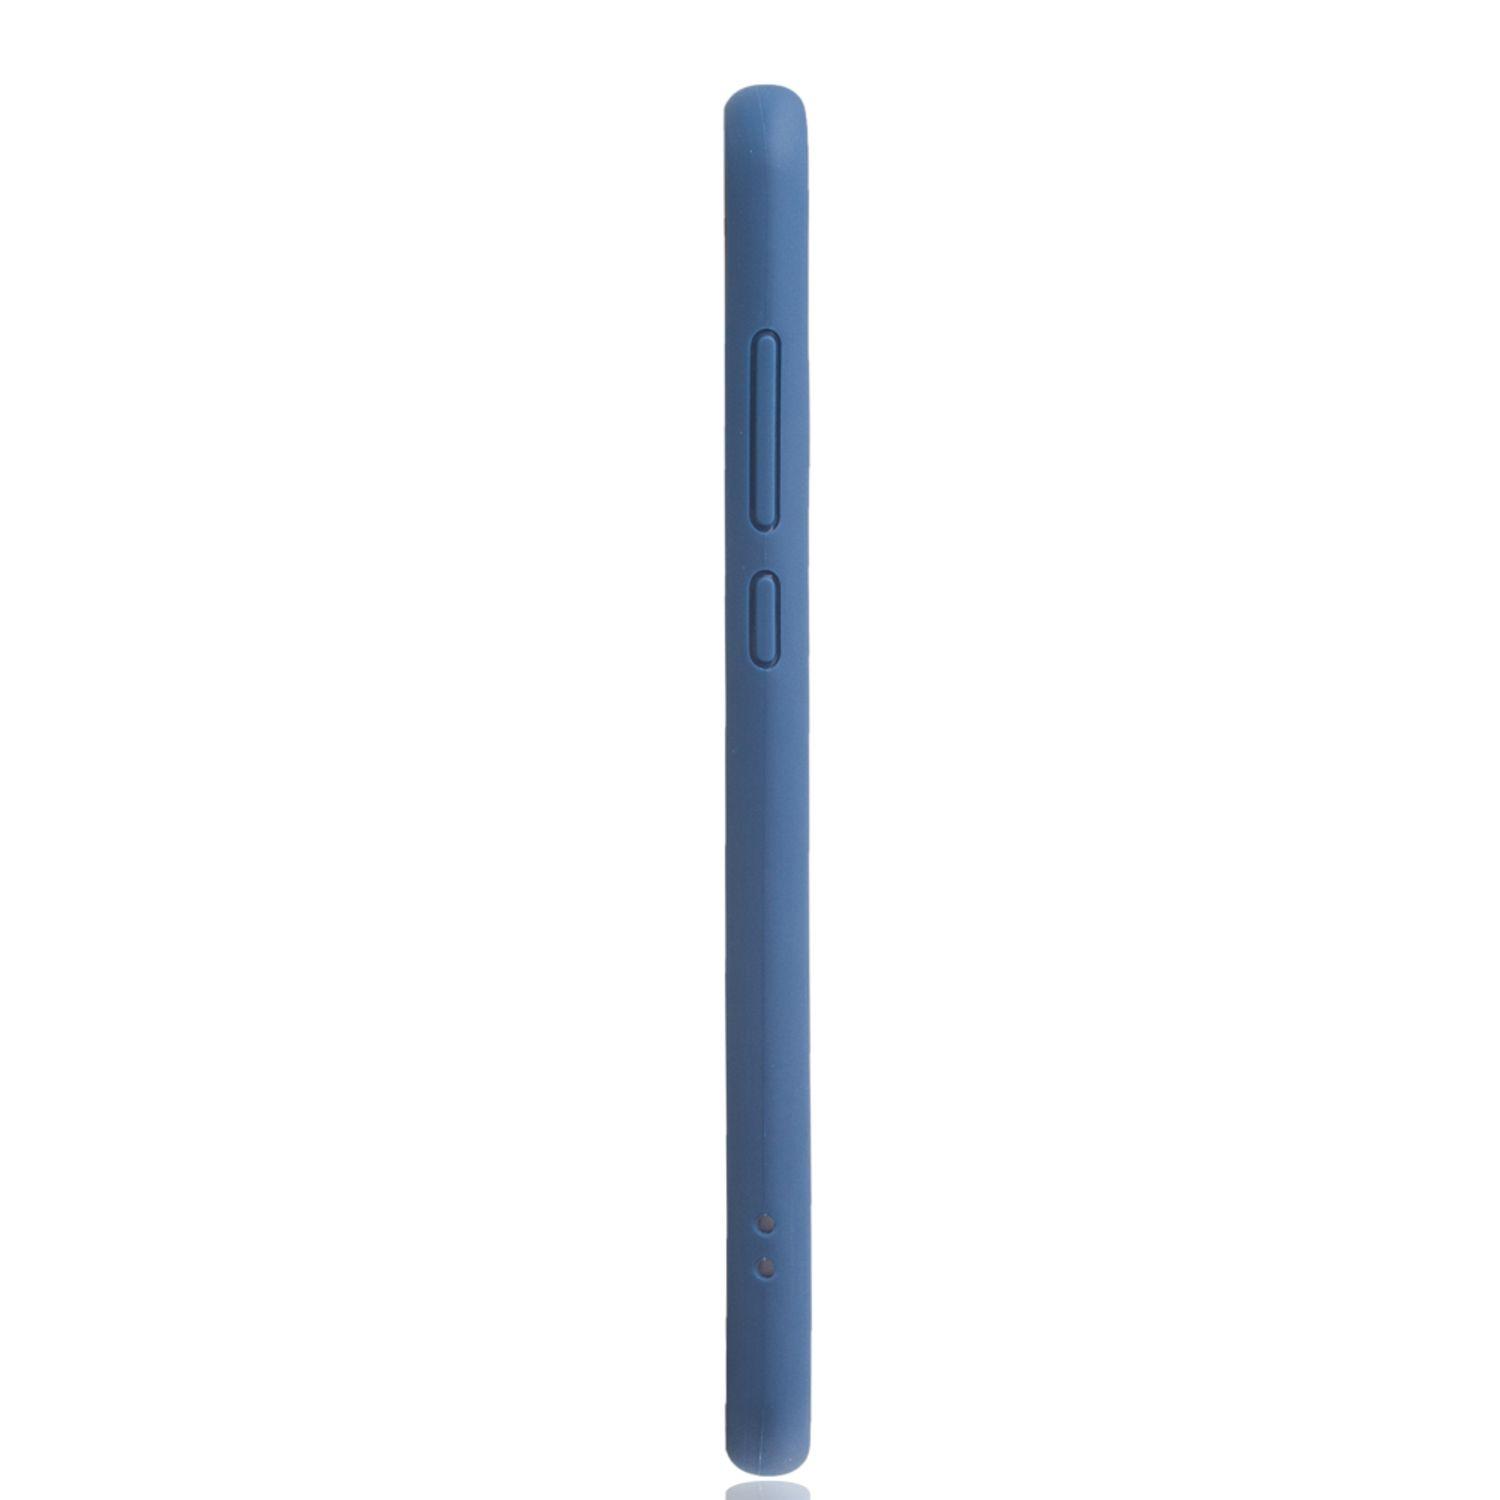 Redmi 5 DESIGN Blau Xiaomi, Plus, Backcover, Schutzhülle, KÖNIG